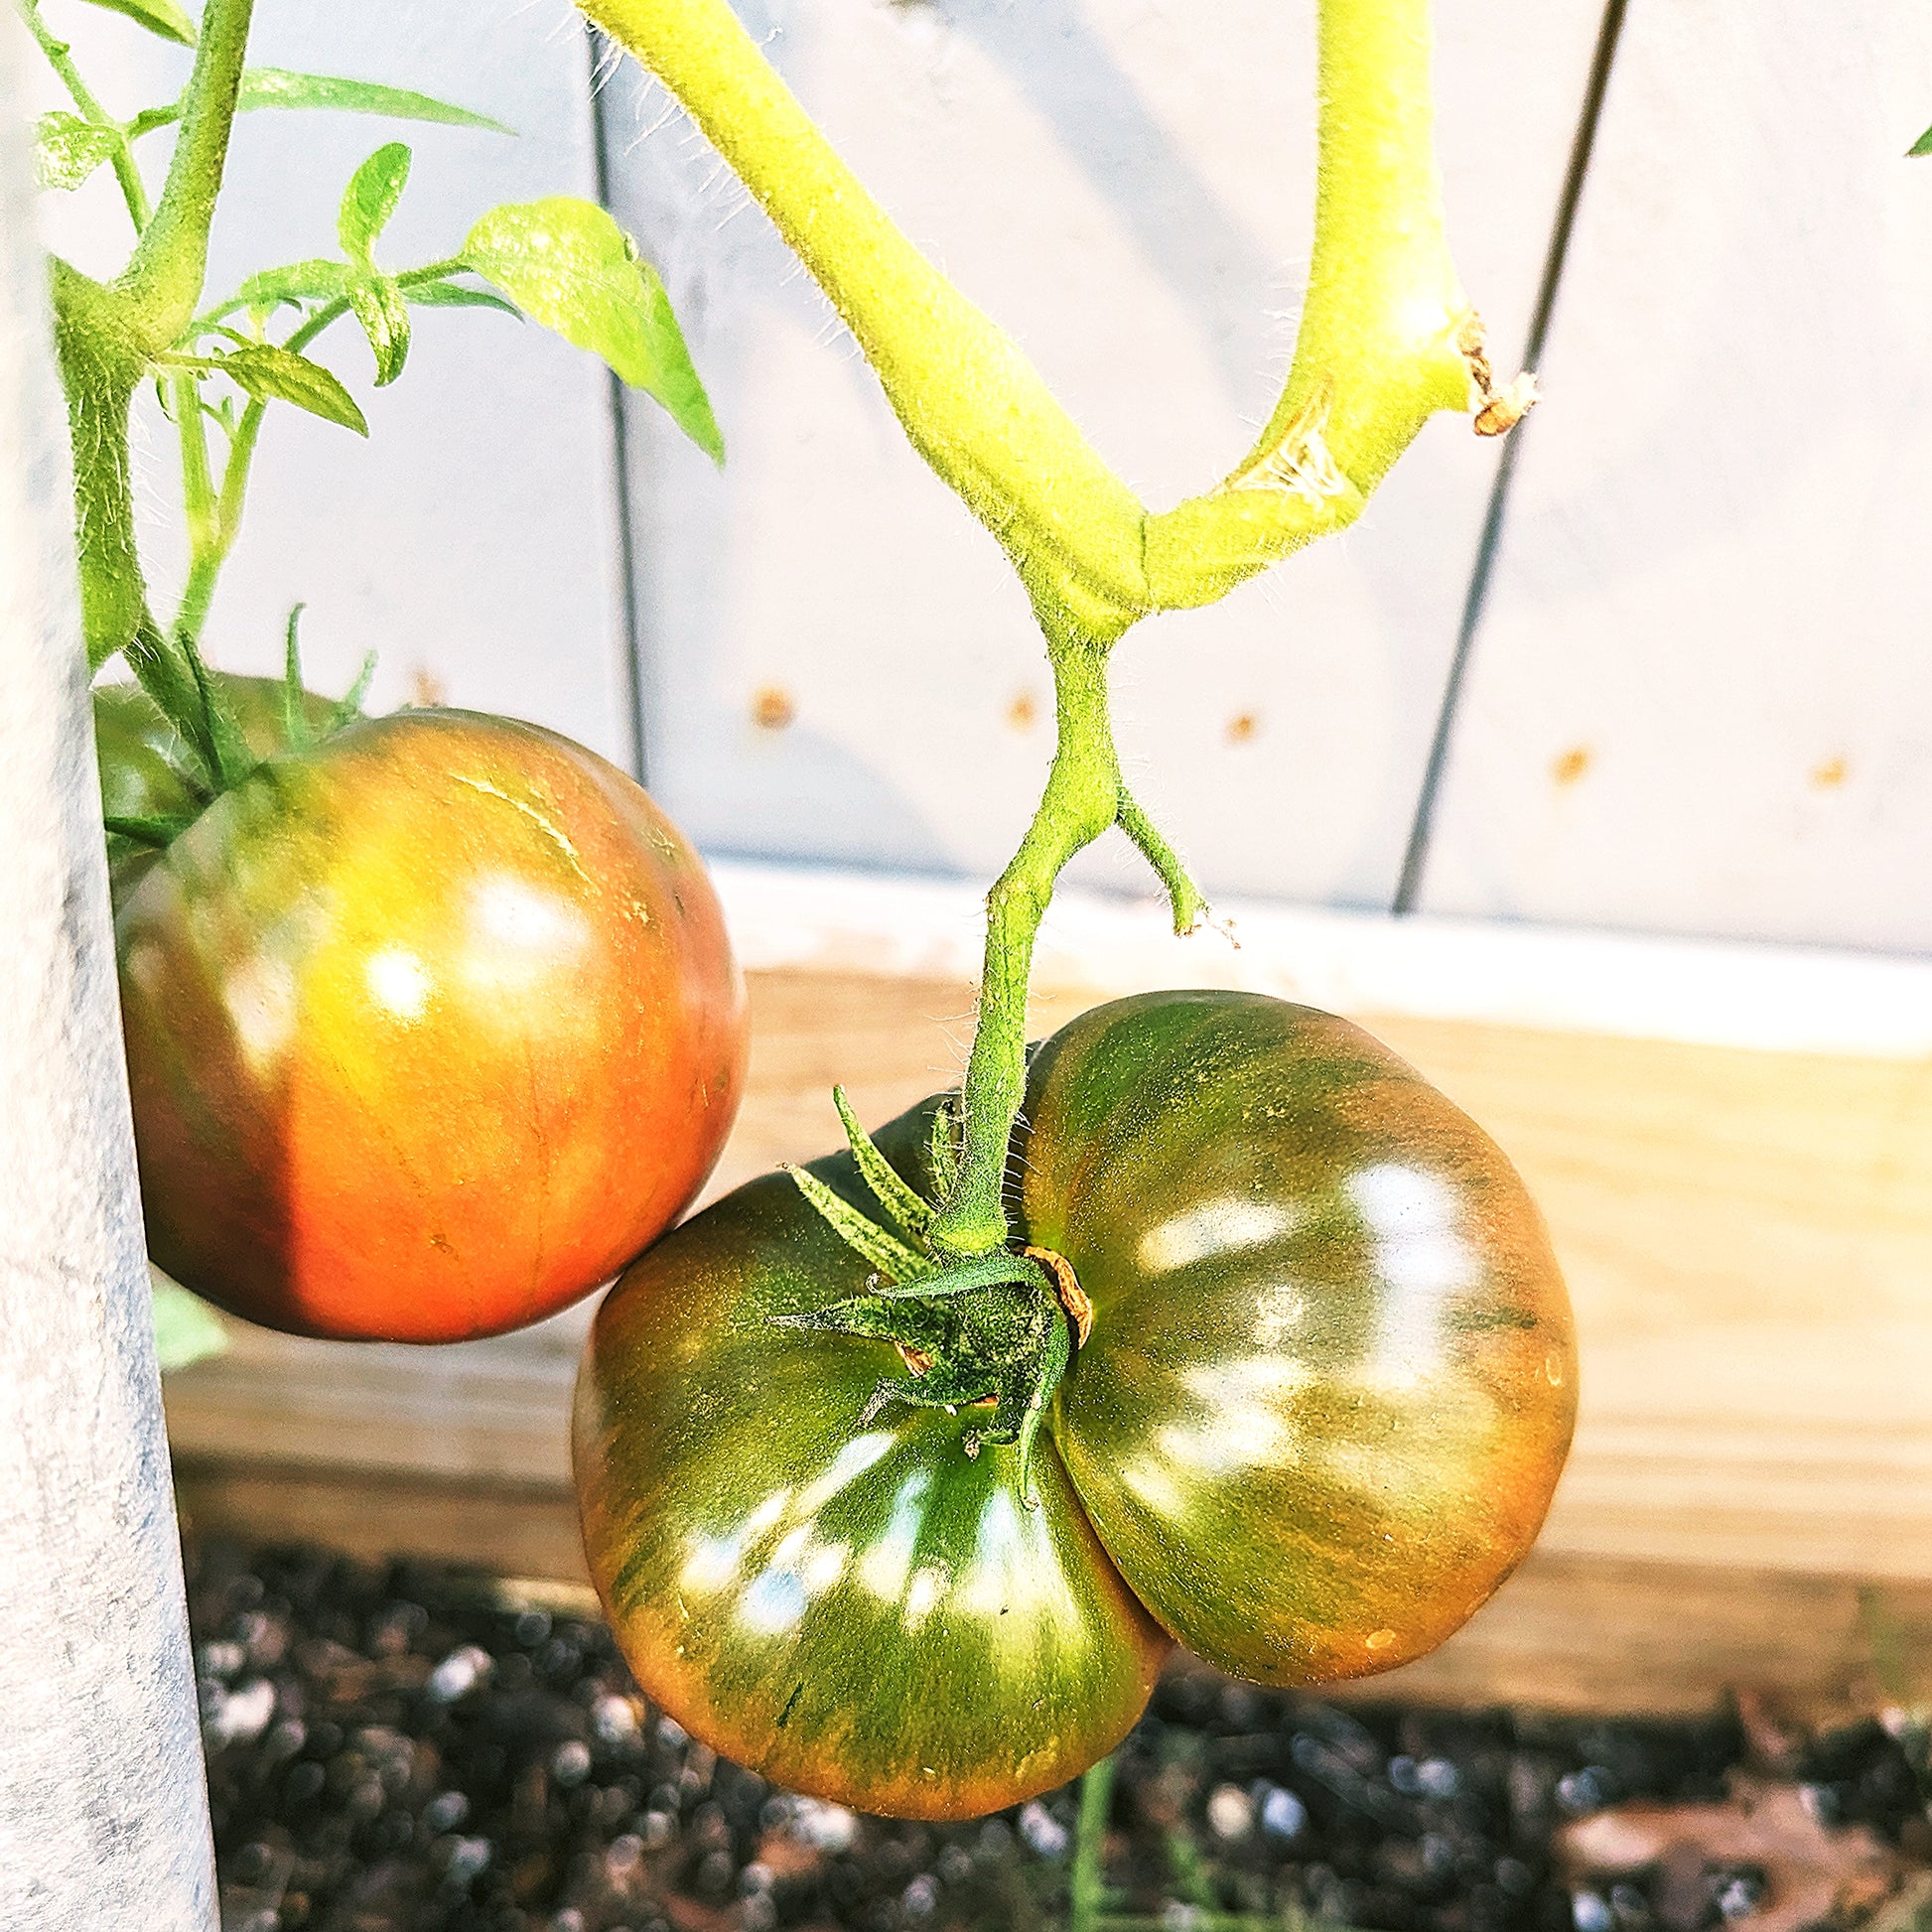 Tomato seeds - Cherokee purple.